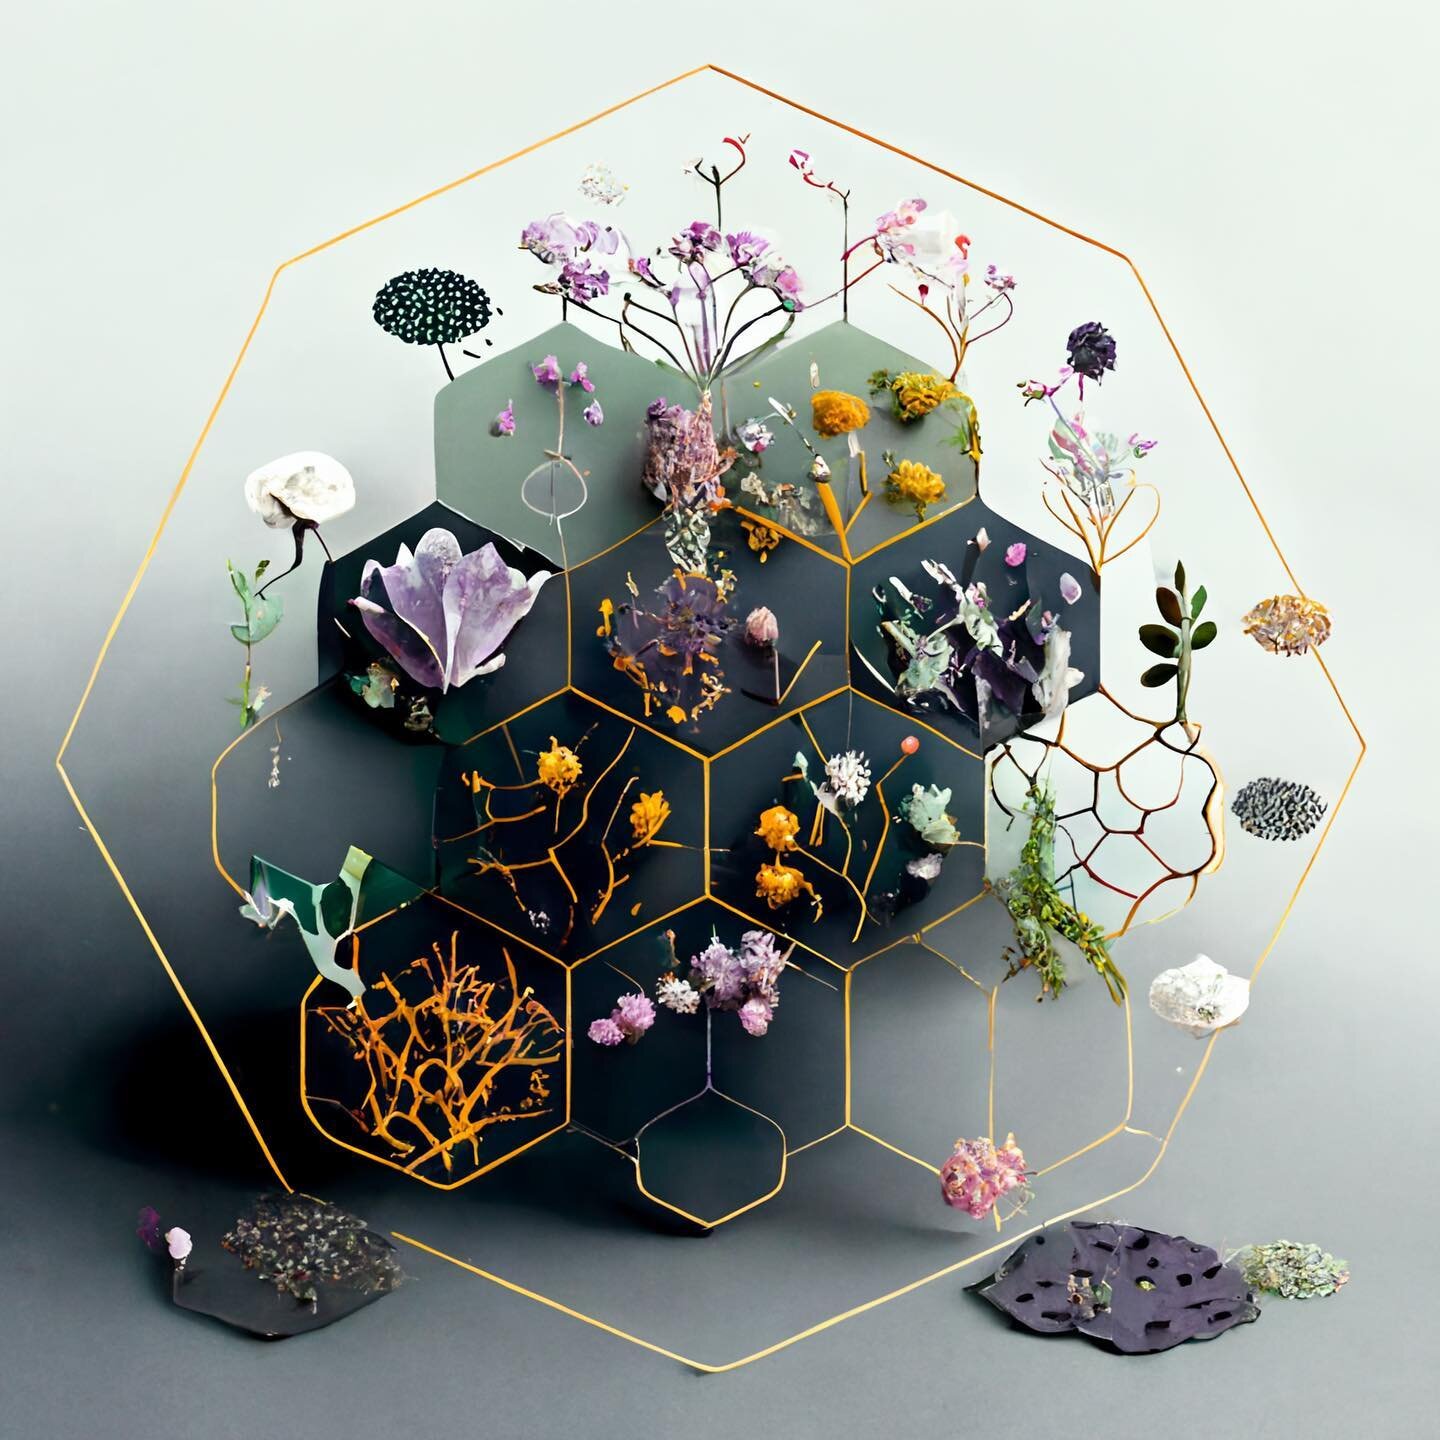 &ldquo;The taxonomy of florals&rdquo;

#aiart #ai #midjourney #generativeart #3d #flowers #data #gemstone #art #artist #dailyart